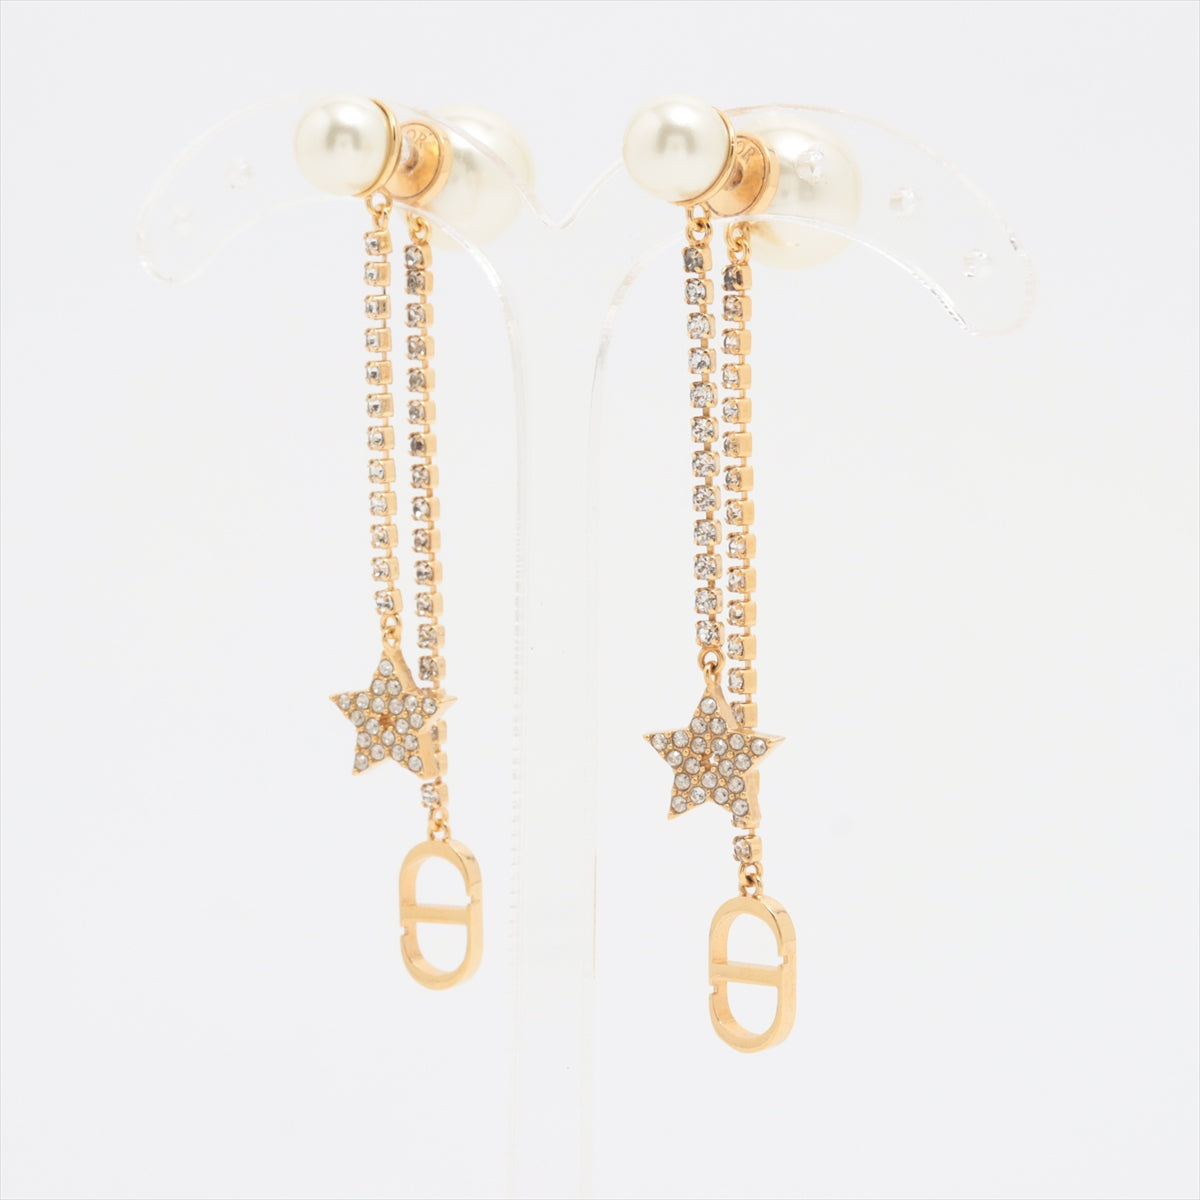 Christian Dior Dior Tribales  DIOR Tribal Piercing jewelry (for both ears) GP x rhinestone x imitation pearl Gold